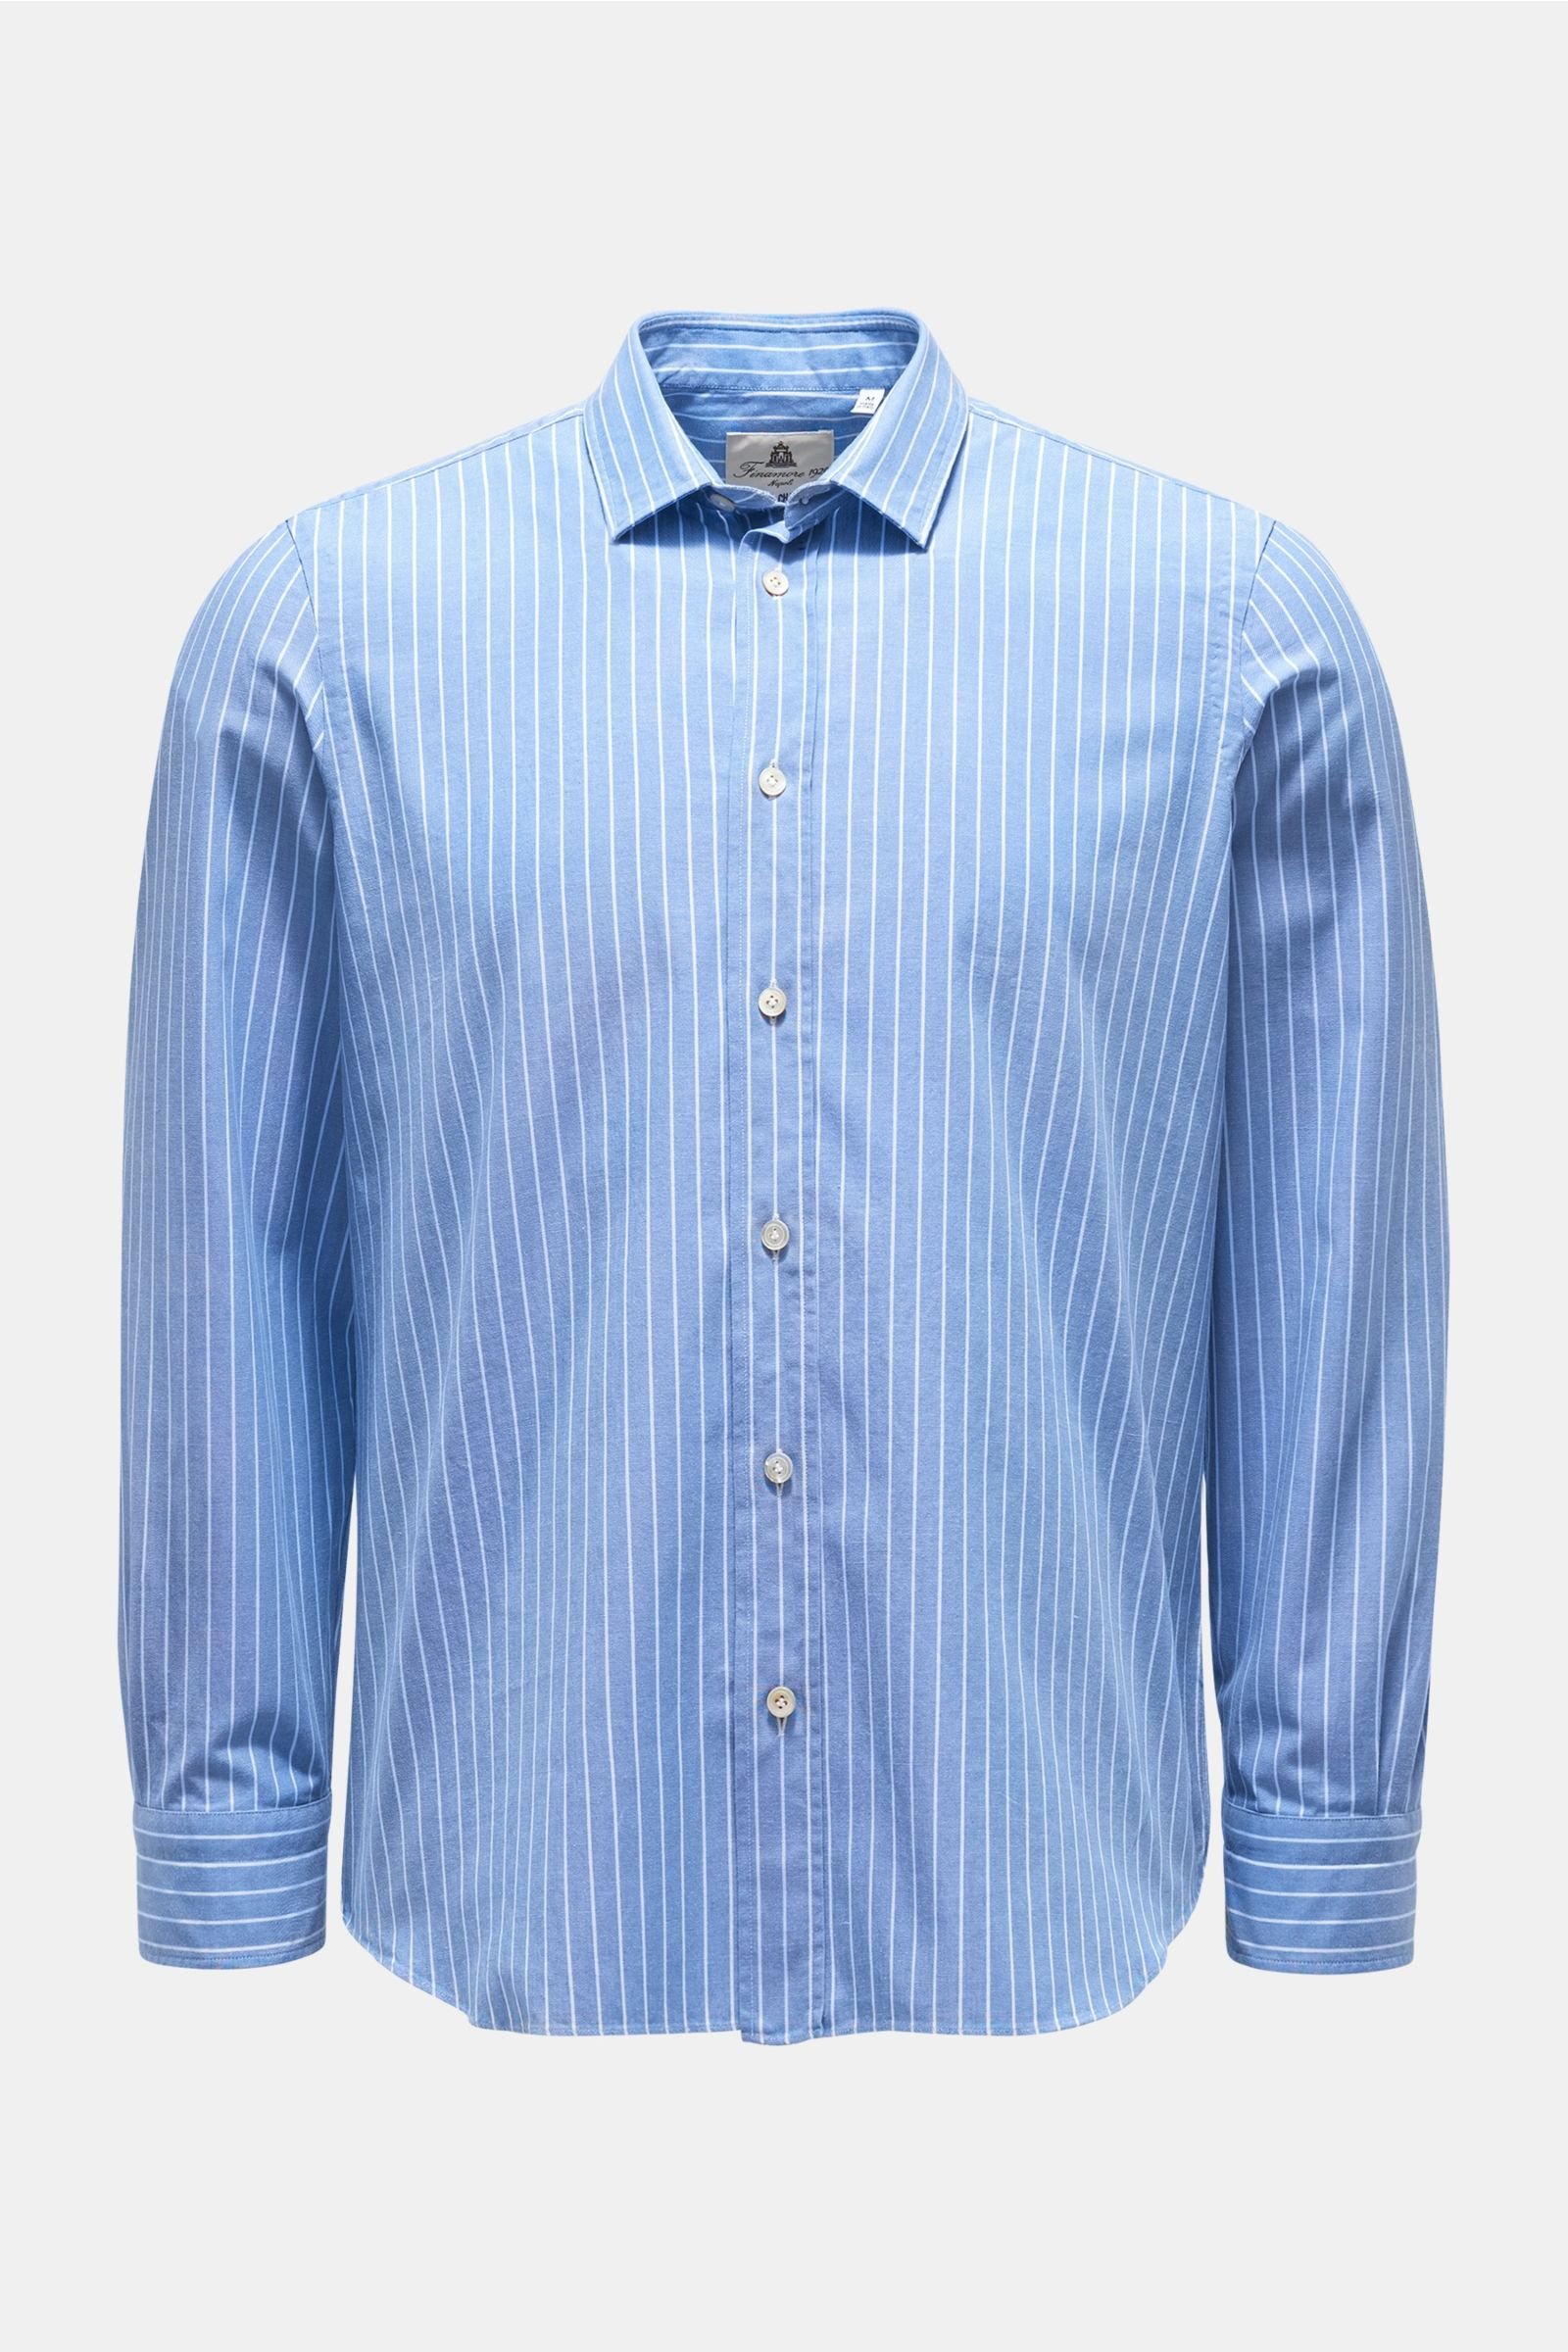 Chambray shirt 'Silvano Clark' with slim collar smoky blue/white striped